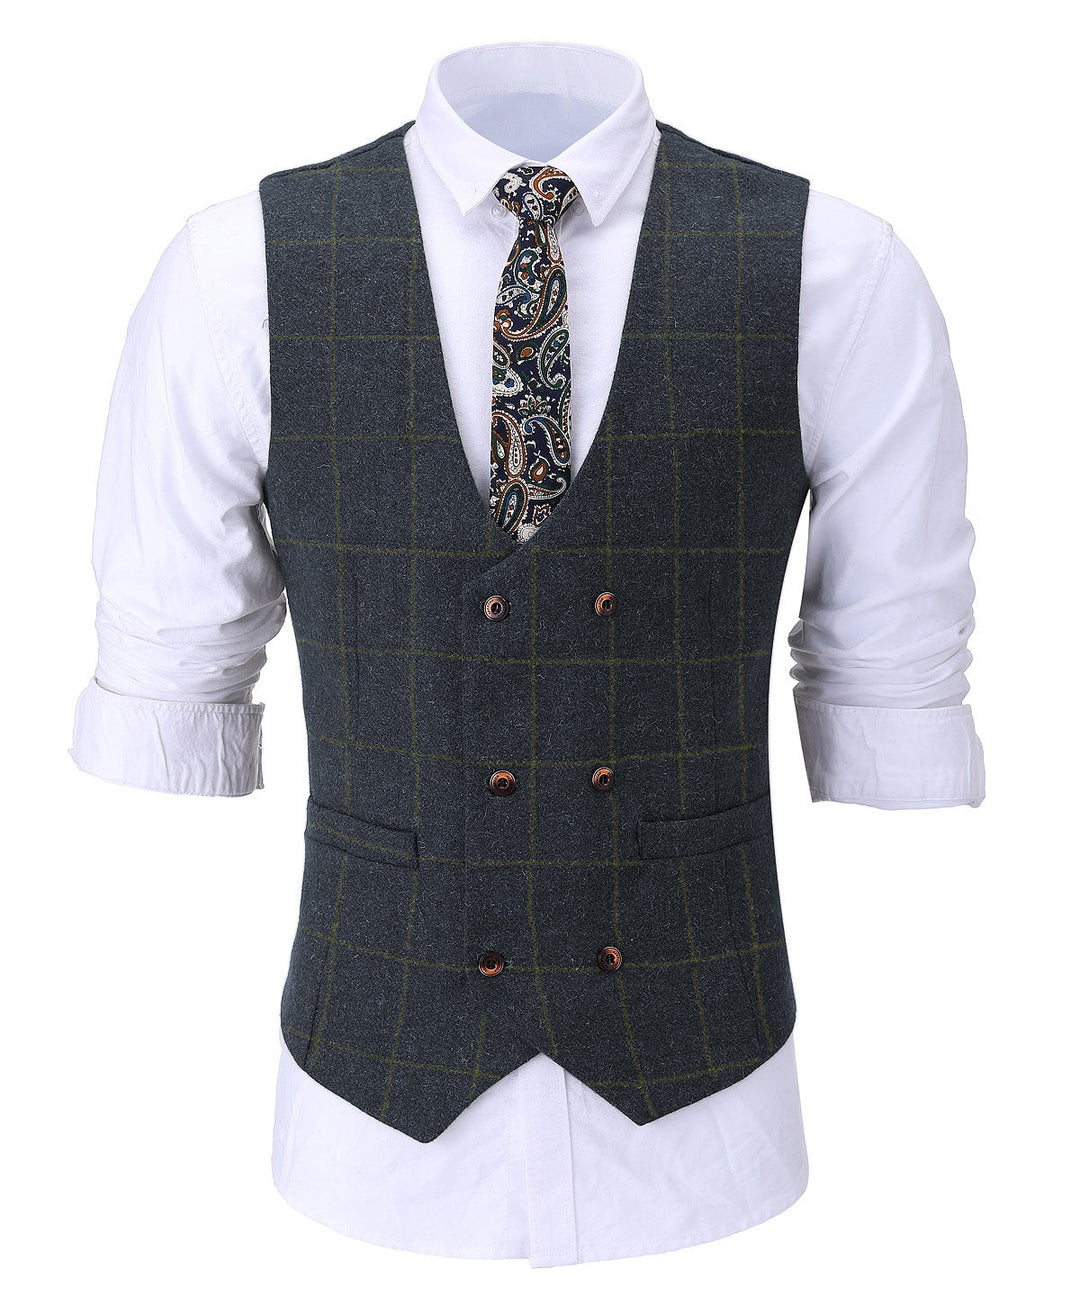 Casual Men's Suit Vest Regular Fit Plaid Tweed Waistcoat mens event wear